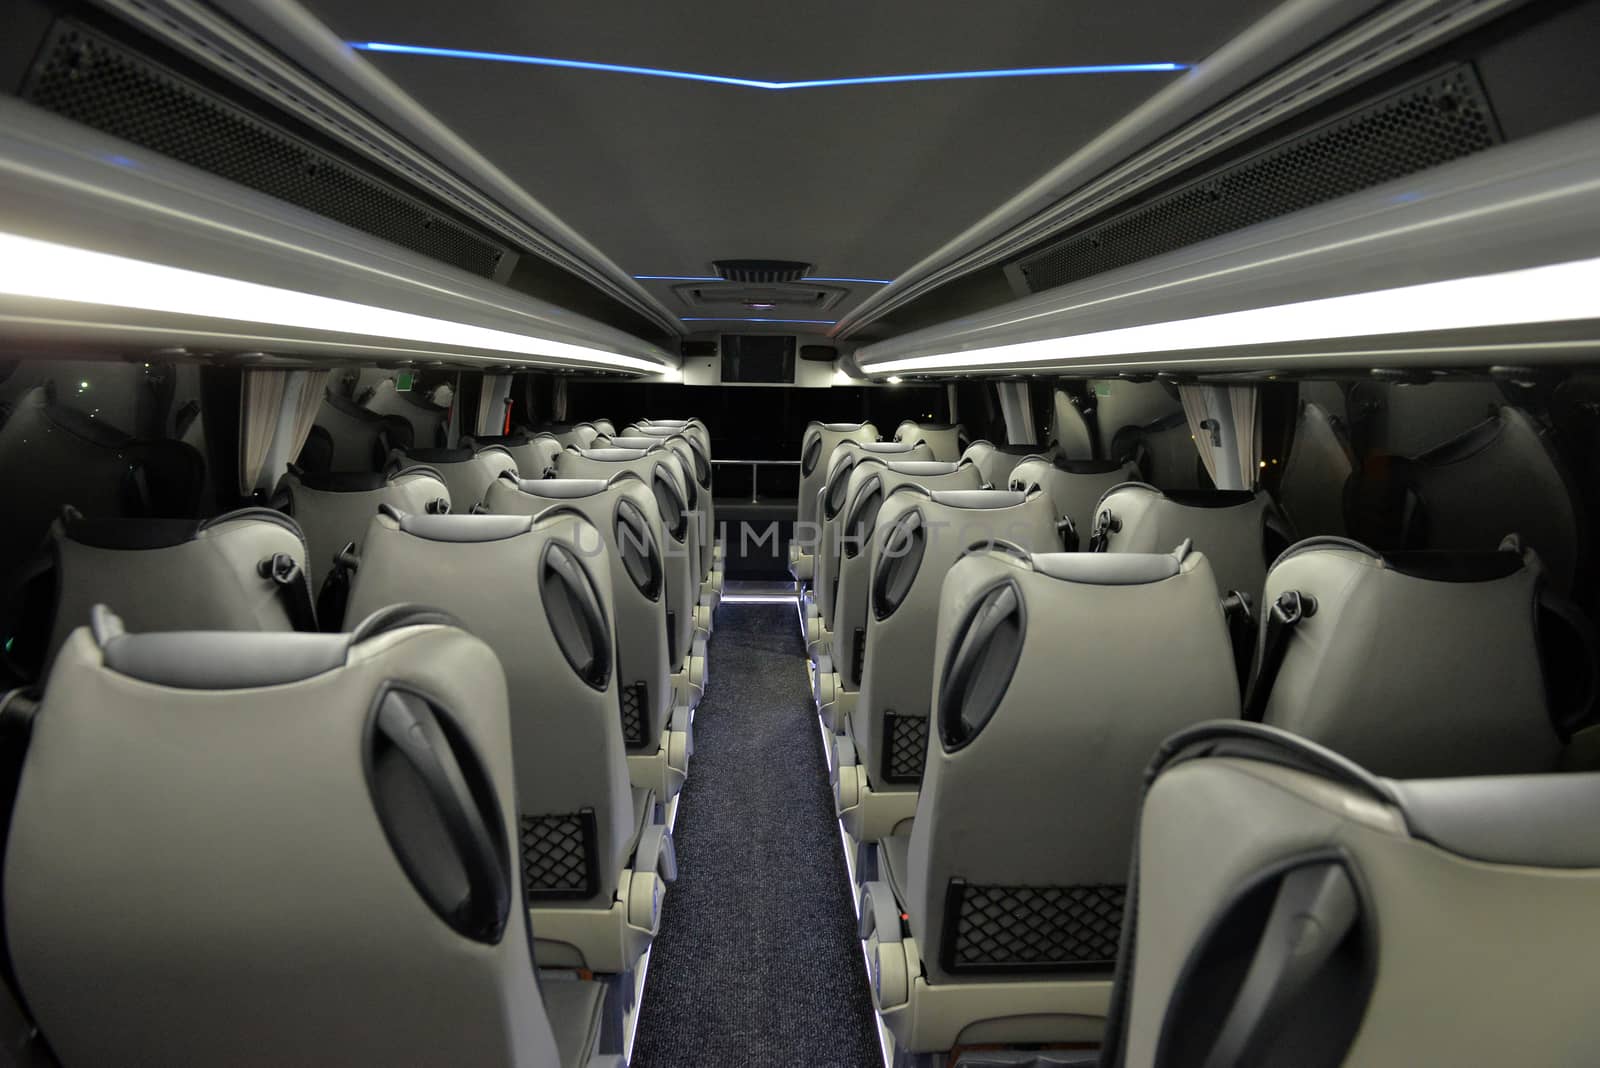 the interior of a high-class tourist bus, bus seats